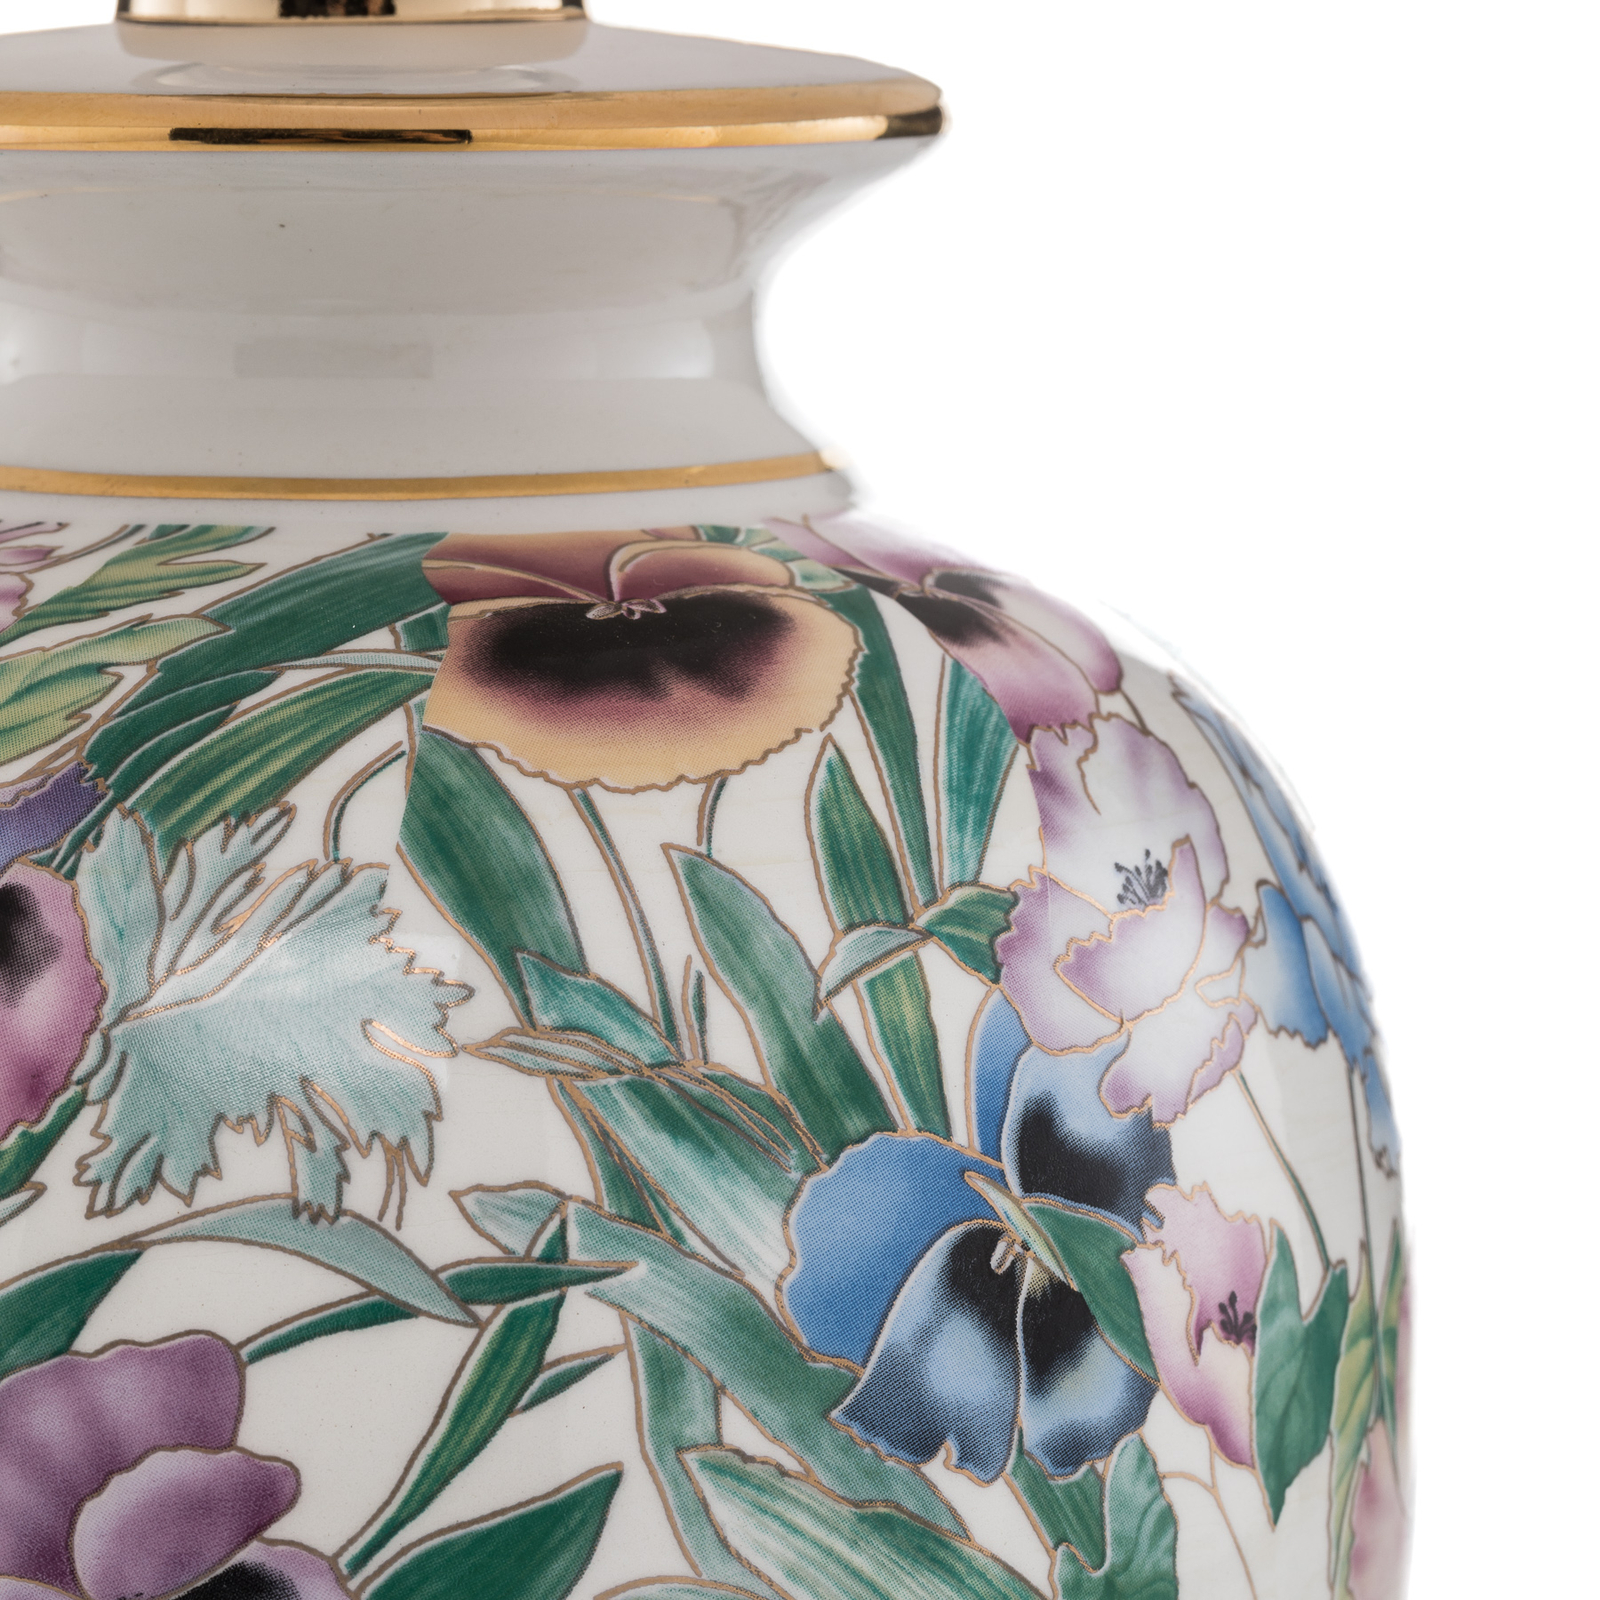 KOLARZ Giardino Panse - floral tafellamp 30 cm